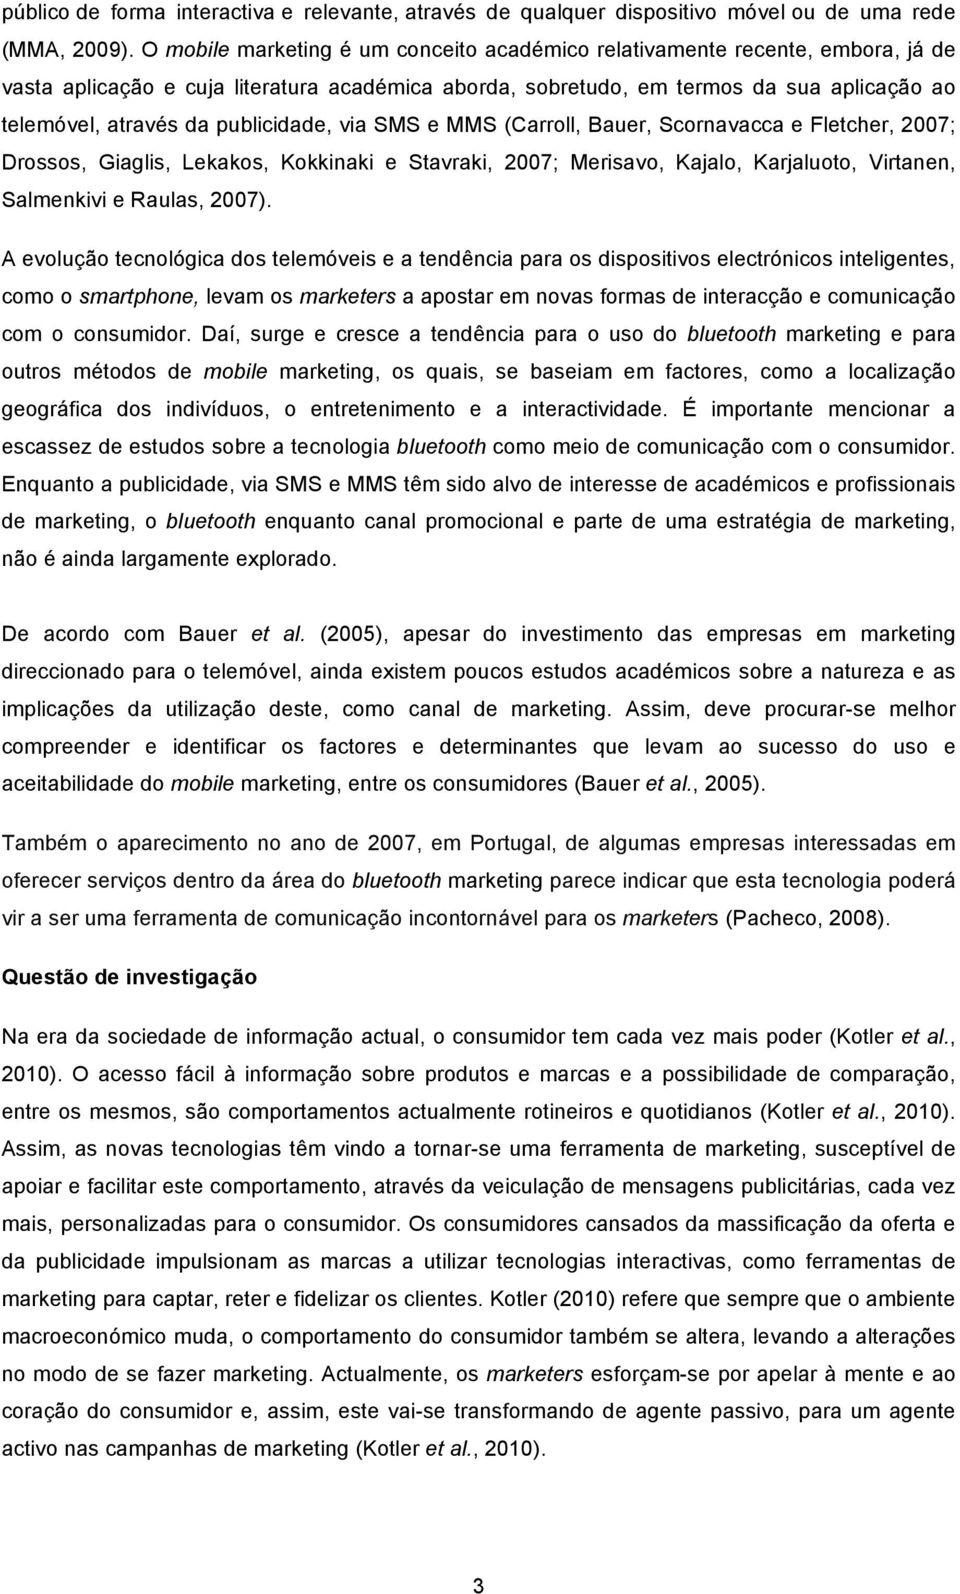 publicidade, via SMS e MMS (Carroll, Bauer, Scornavacca e Fletcher, 2007; Drossos, Giaglis, Lekakos, Kokkinaki e Stavraki, 2007; Merisavo, Kajalo, Karjaluoto, Virtanen, Salmenkivi e Raulas, 2007).